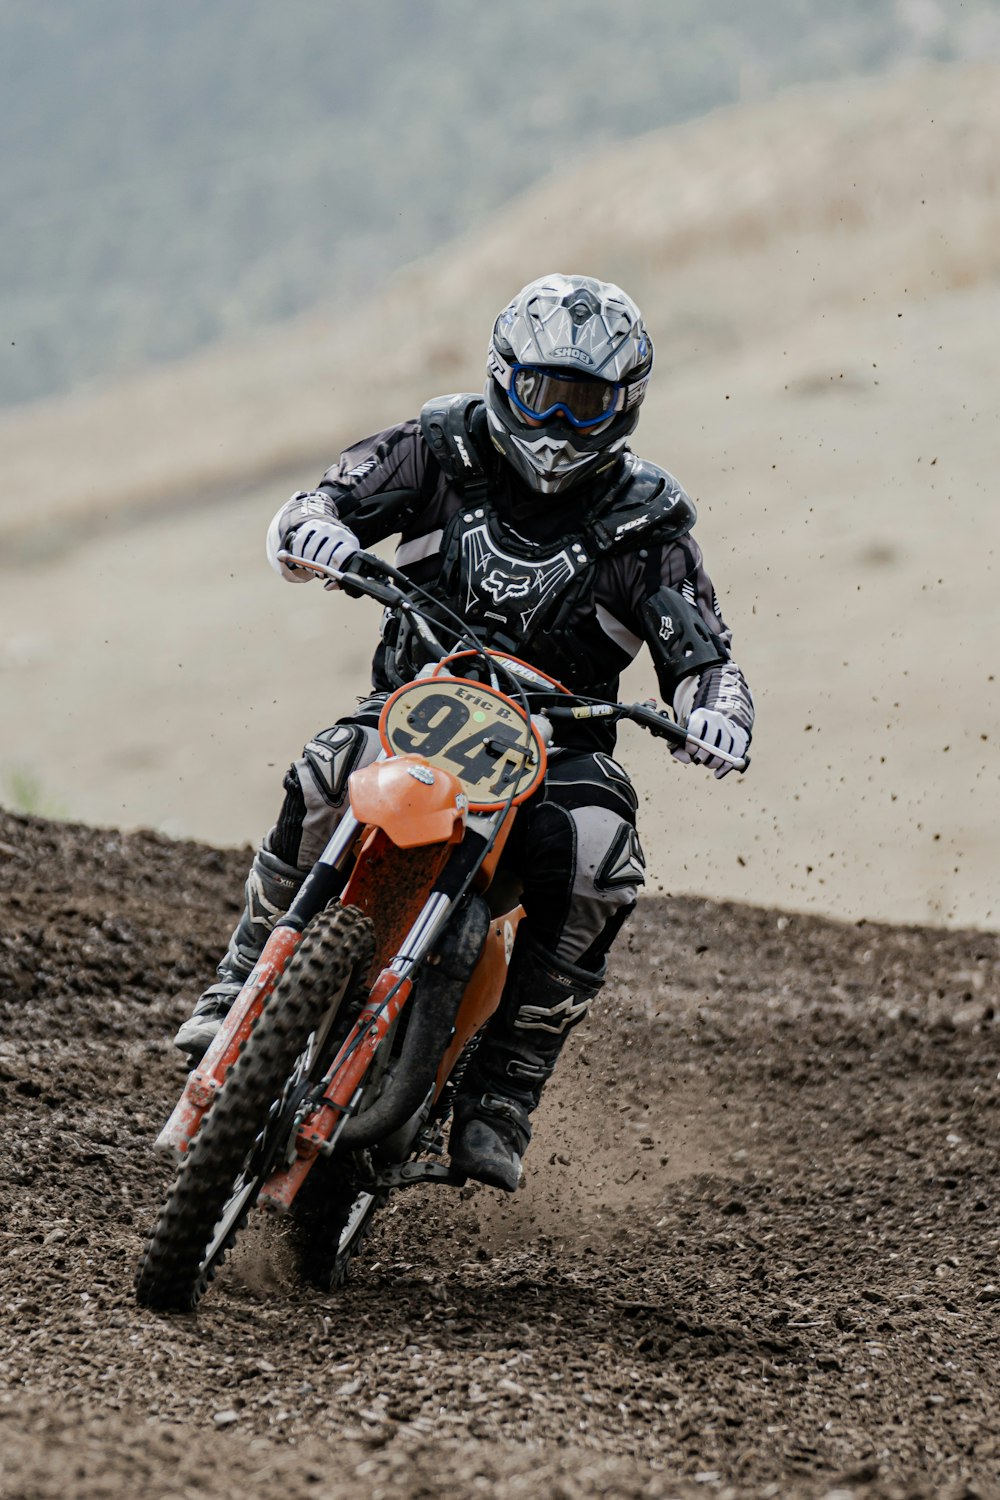 Man black orange motorcycle riding orange and black motocross dirt bike photo – Free Helmet Image on Unsplash